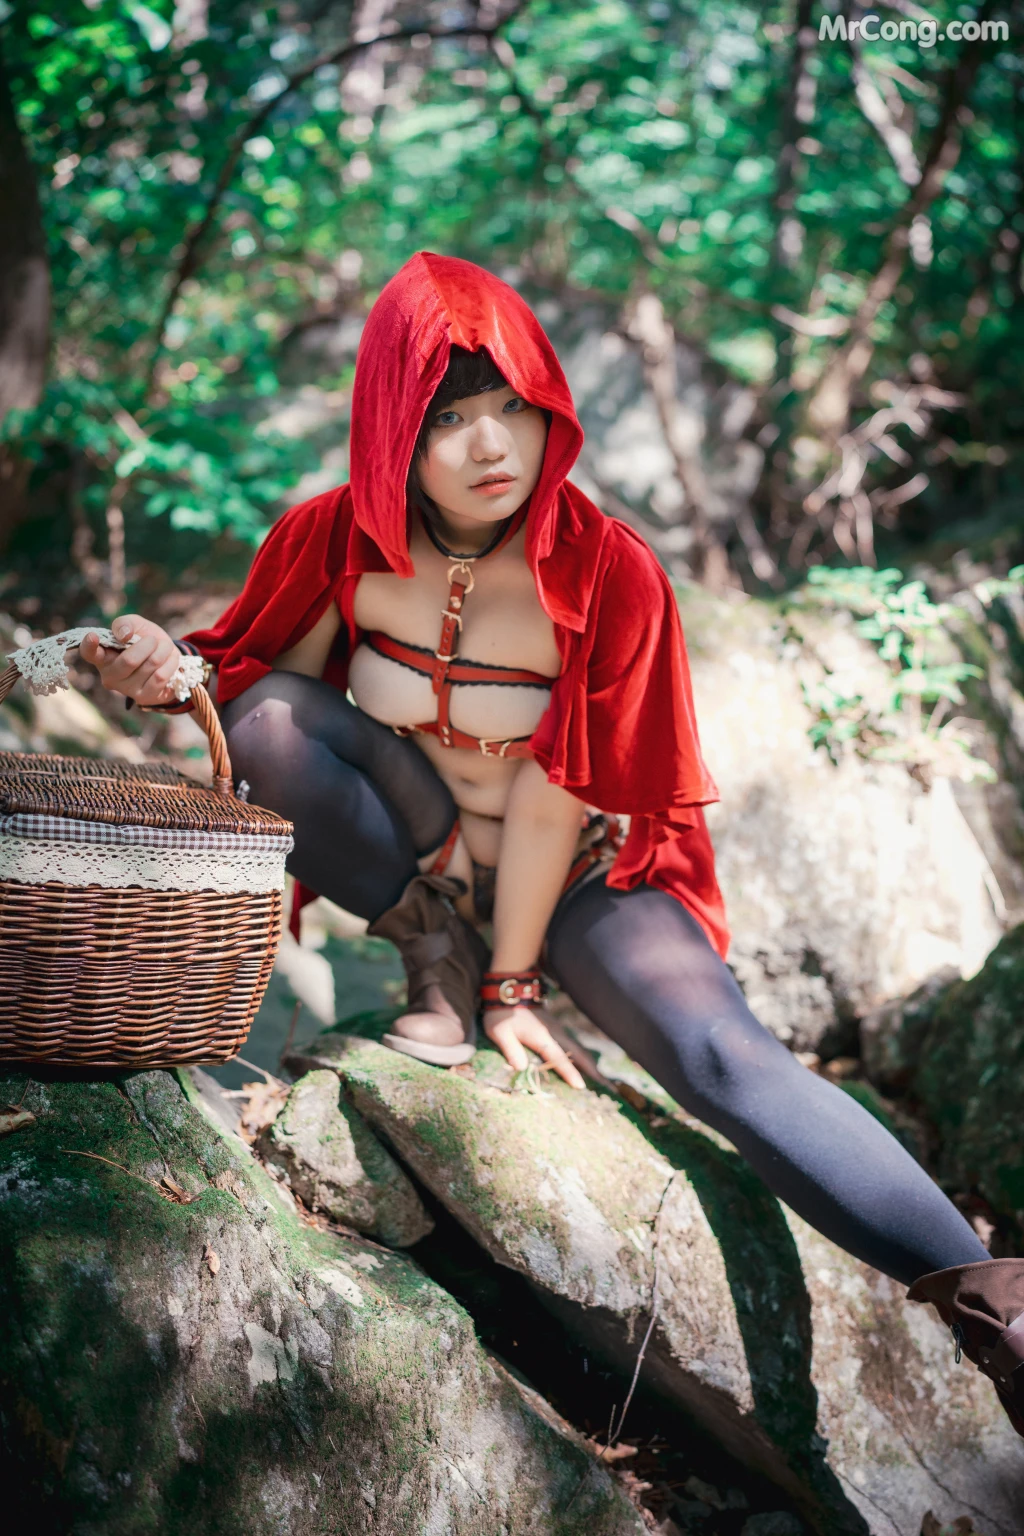 DJAWA Photo - Mimmi (밈미): "Naughty Red Hiring Hood" (125 photos) photo 3-2